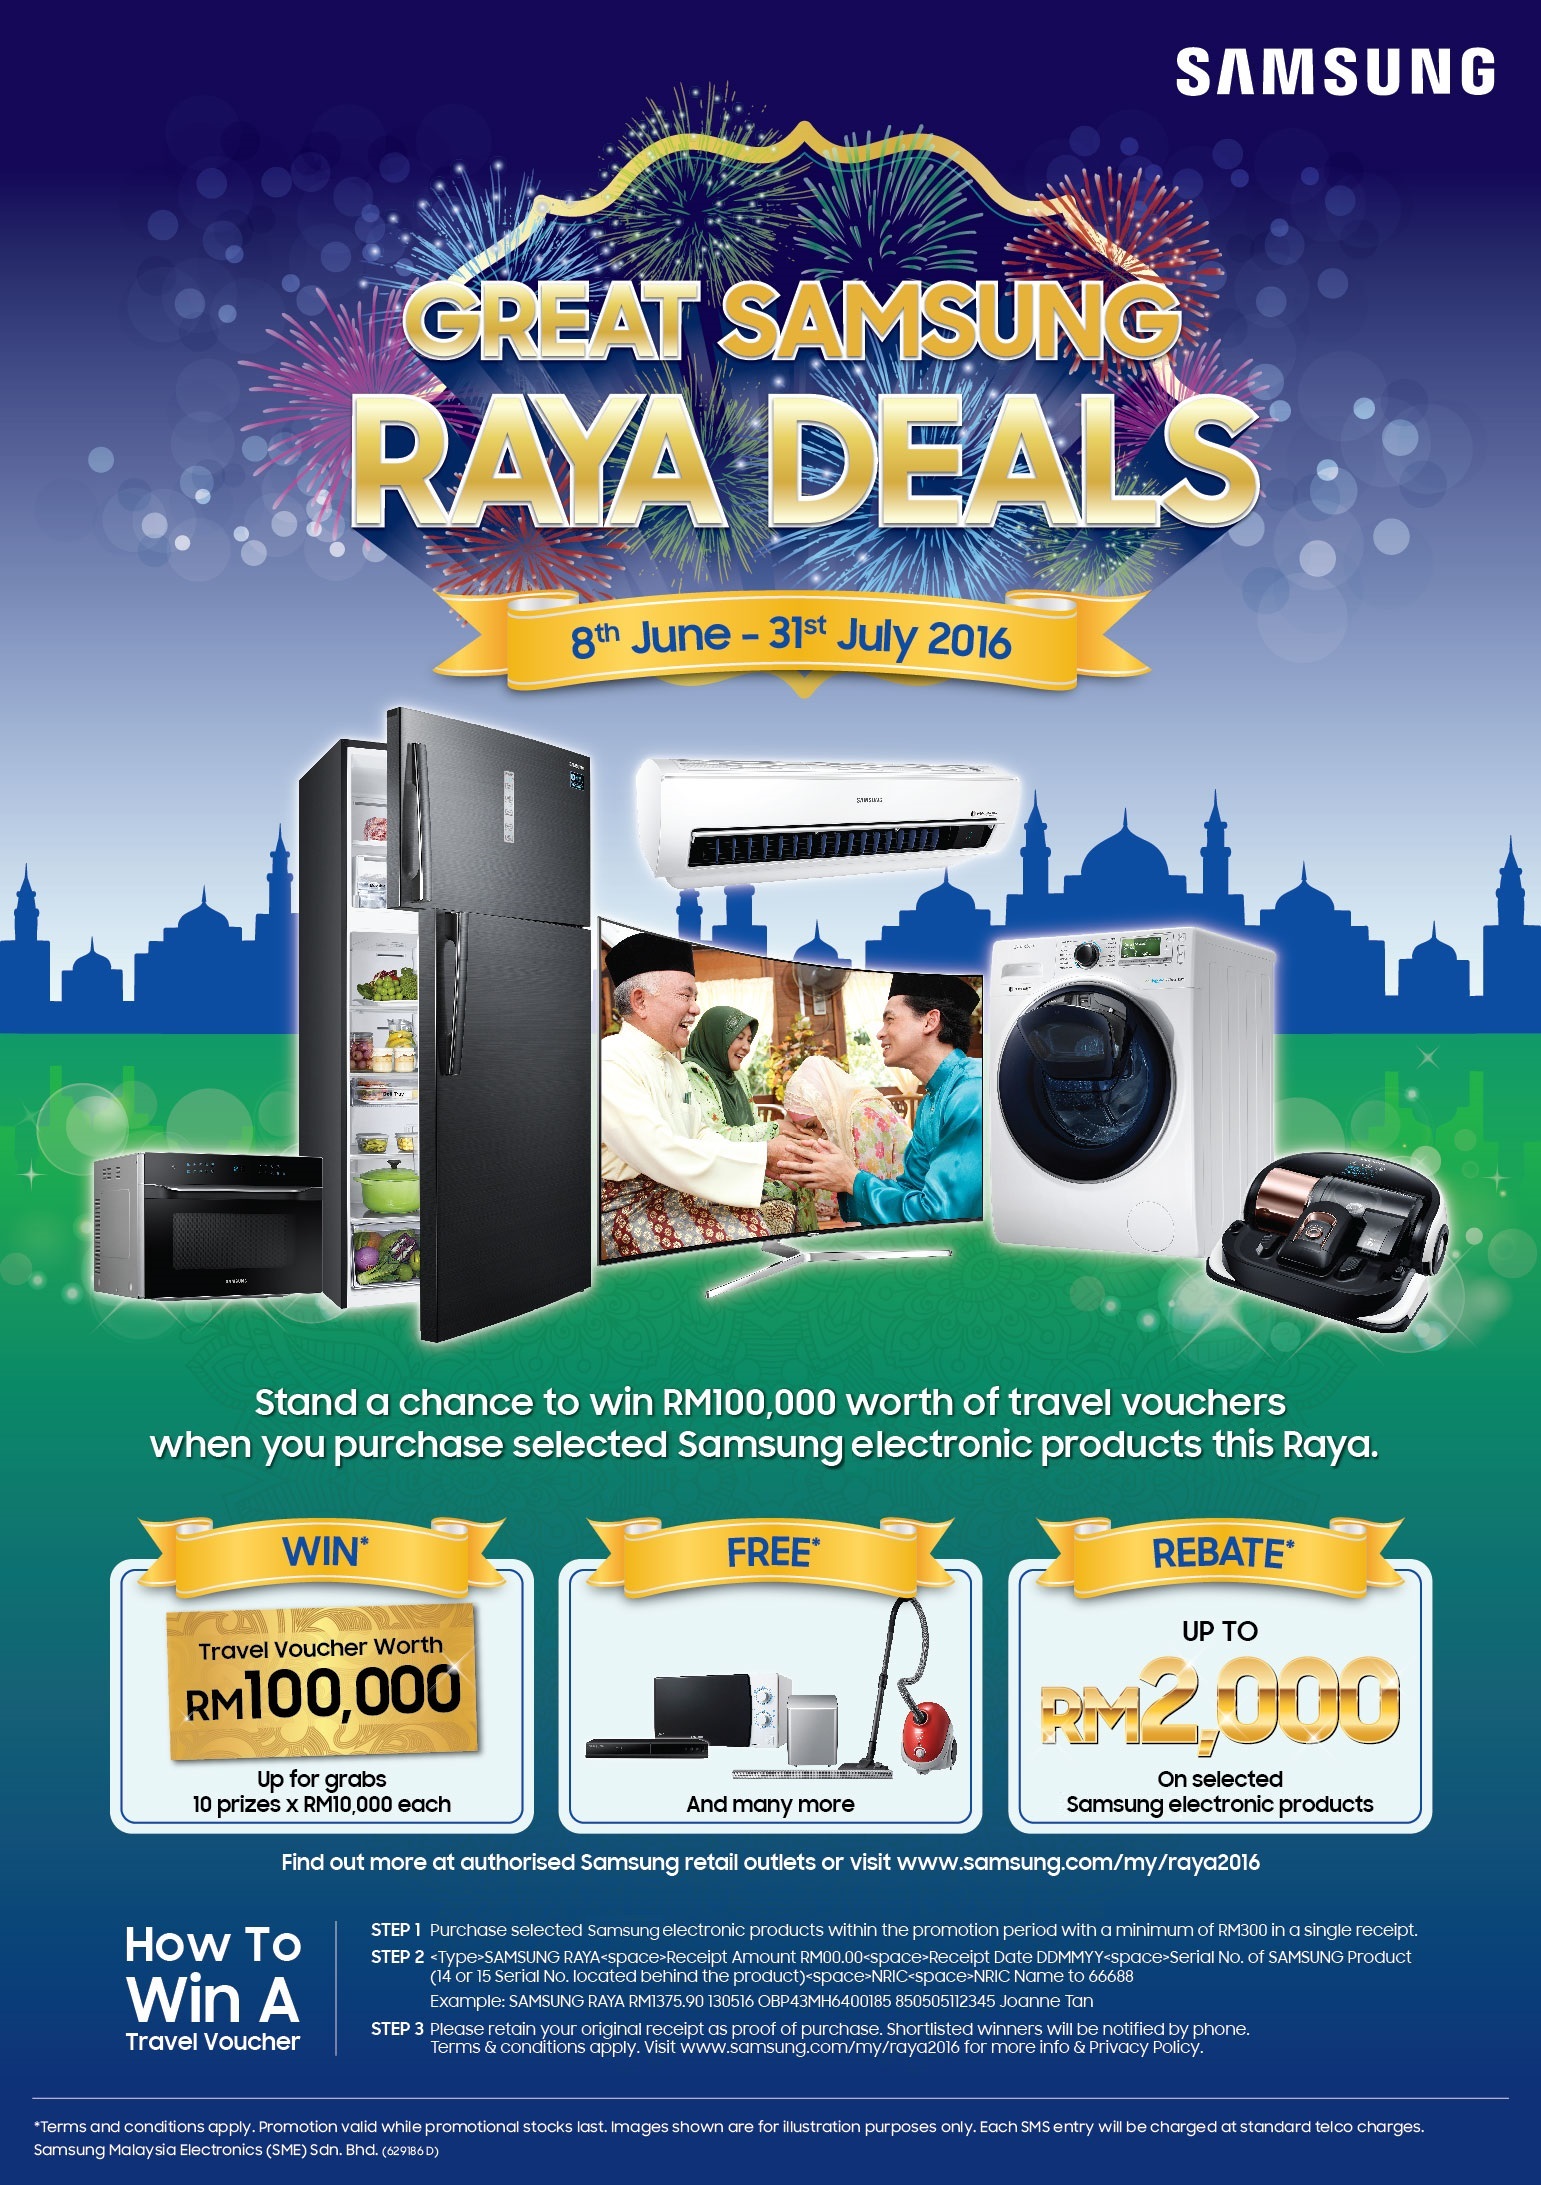 Great Samsung Raya Deals by Samsung starting tomorrow ...